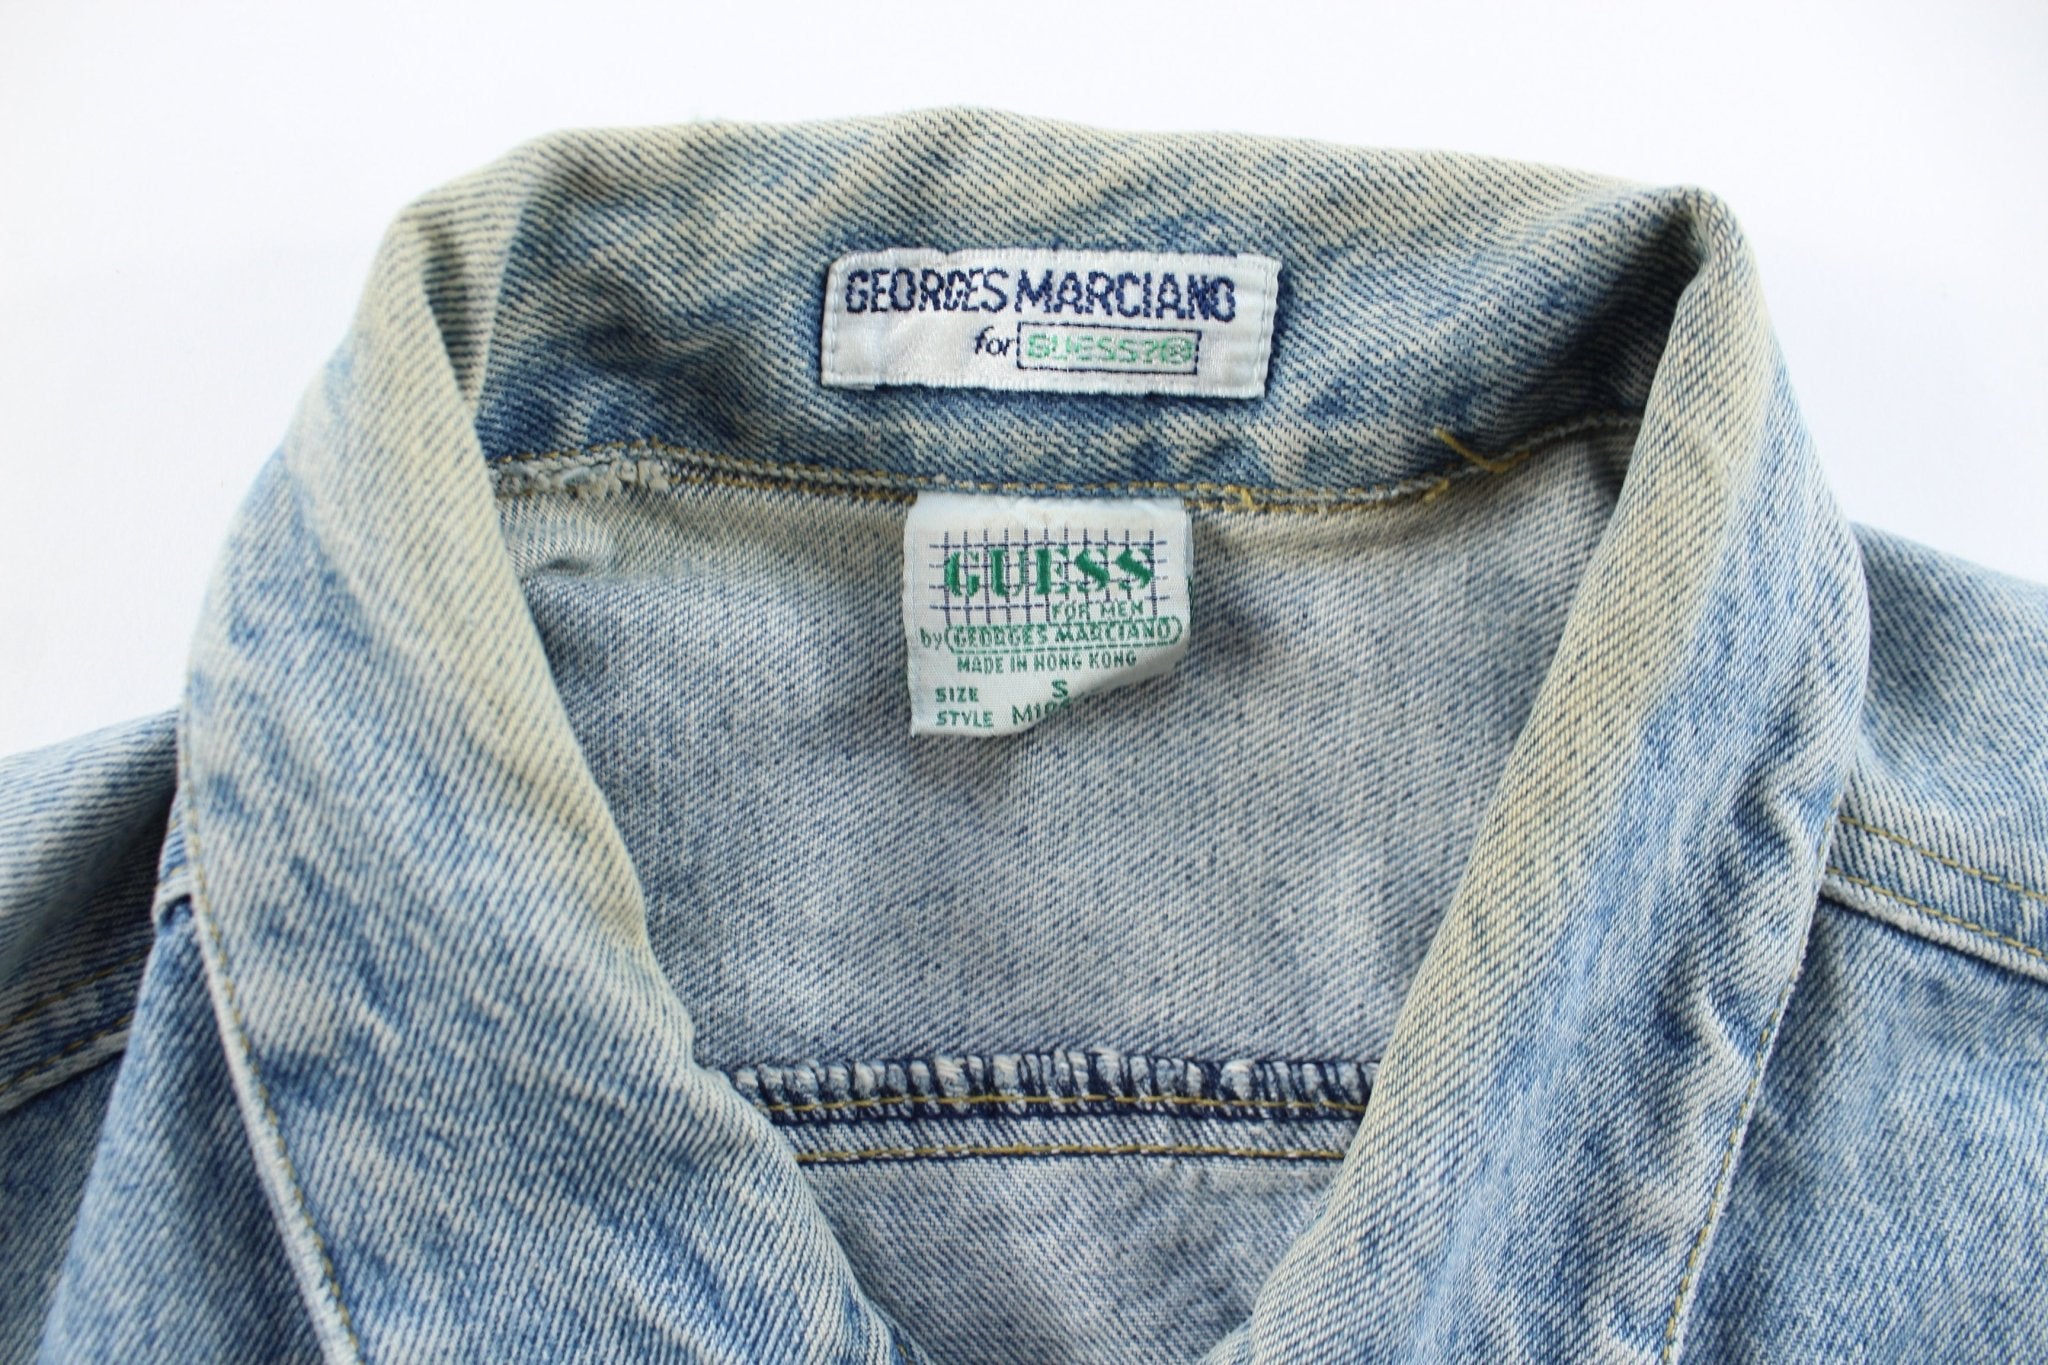 Guess Marciano Light Wash Denim Jacket - ThriftedThreads.com